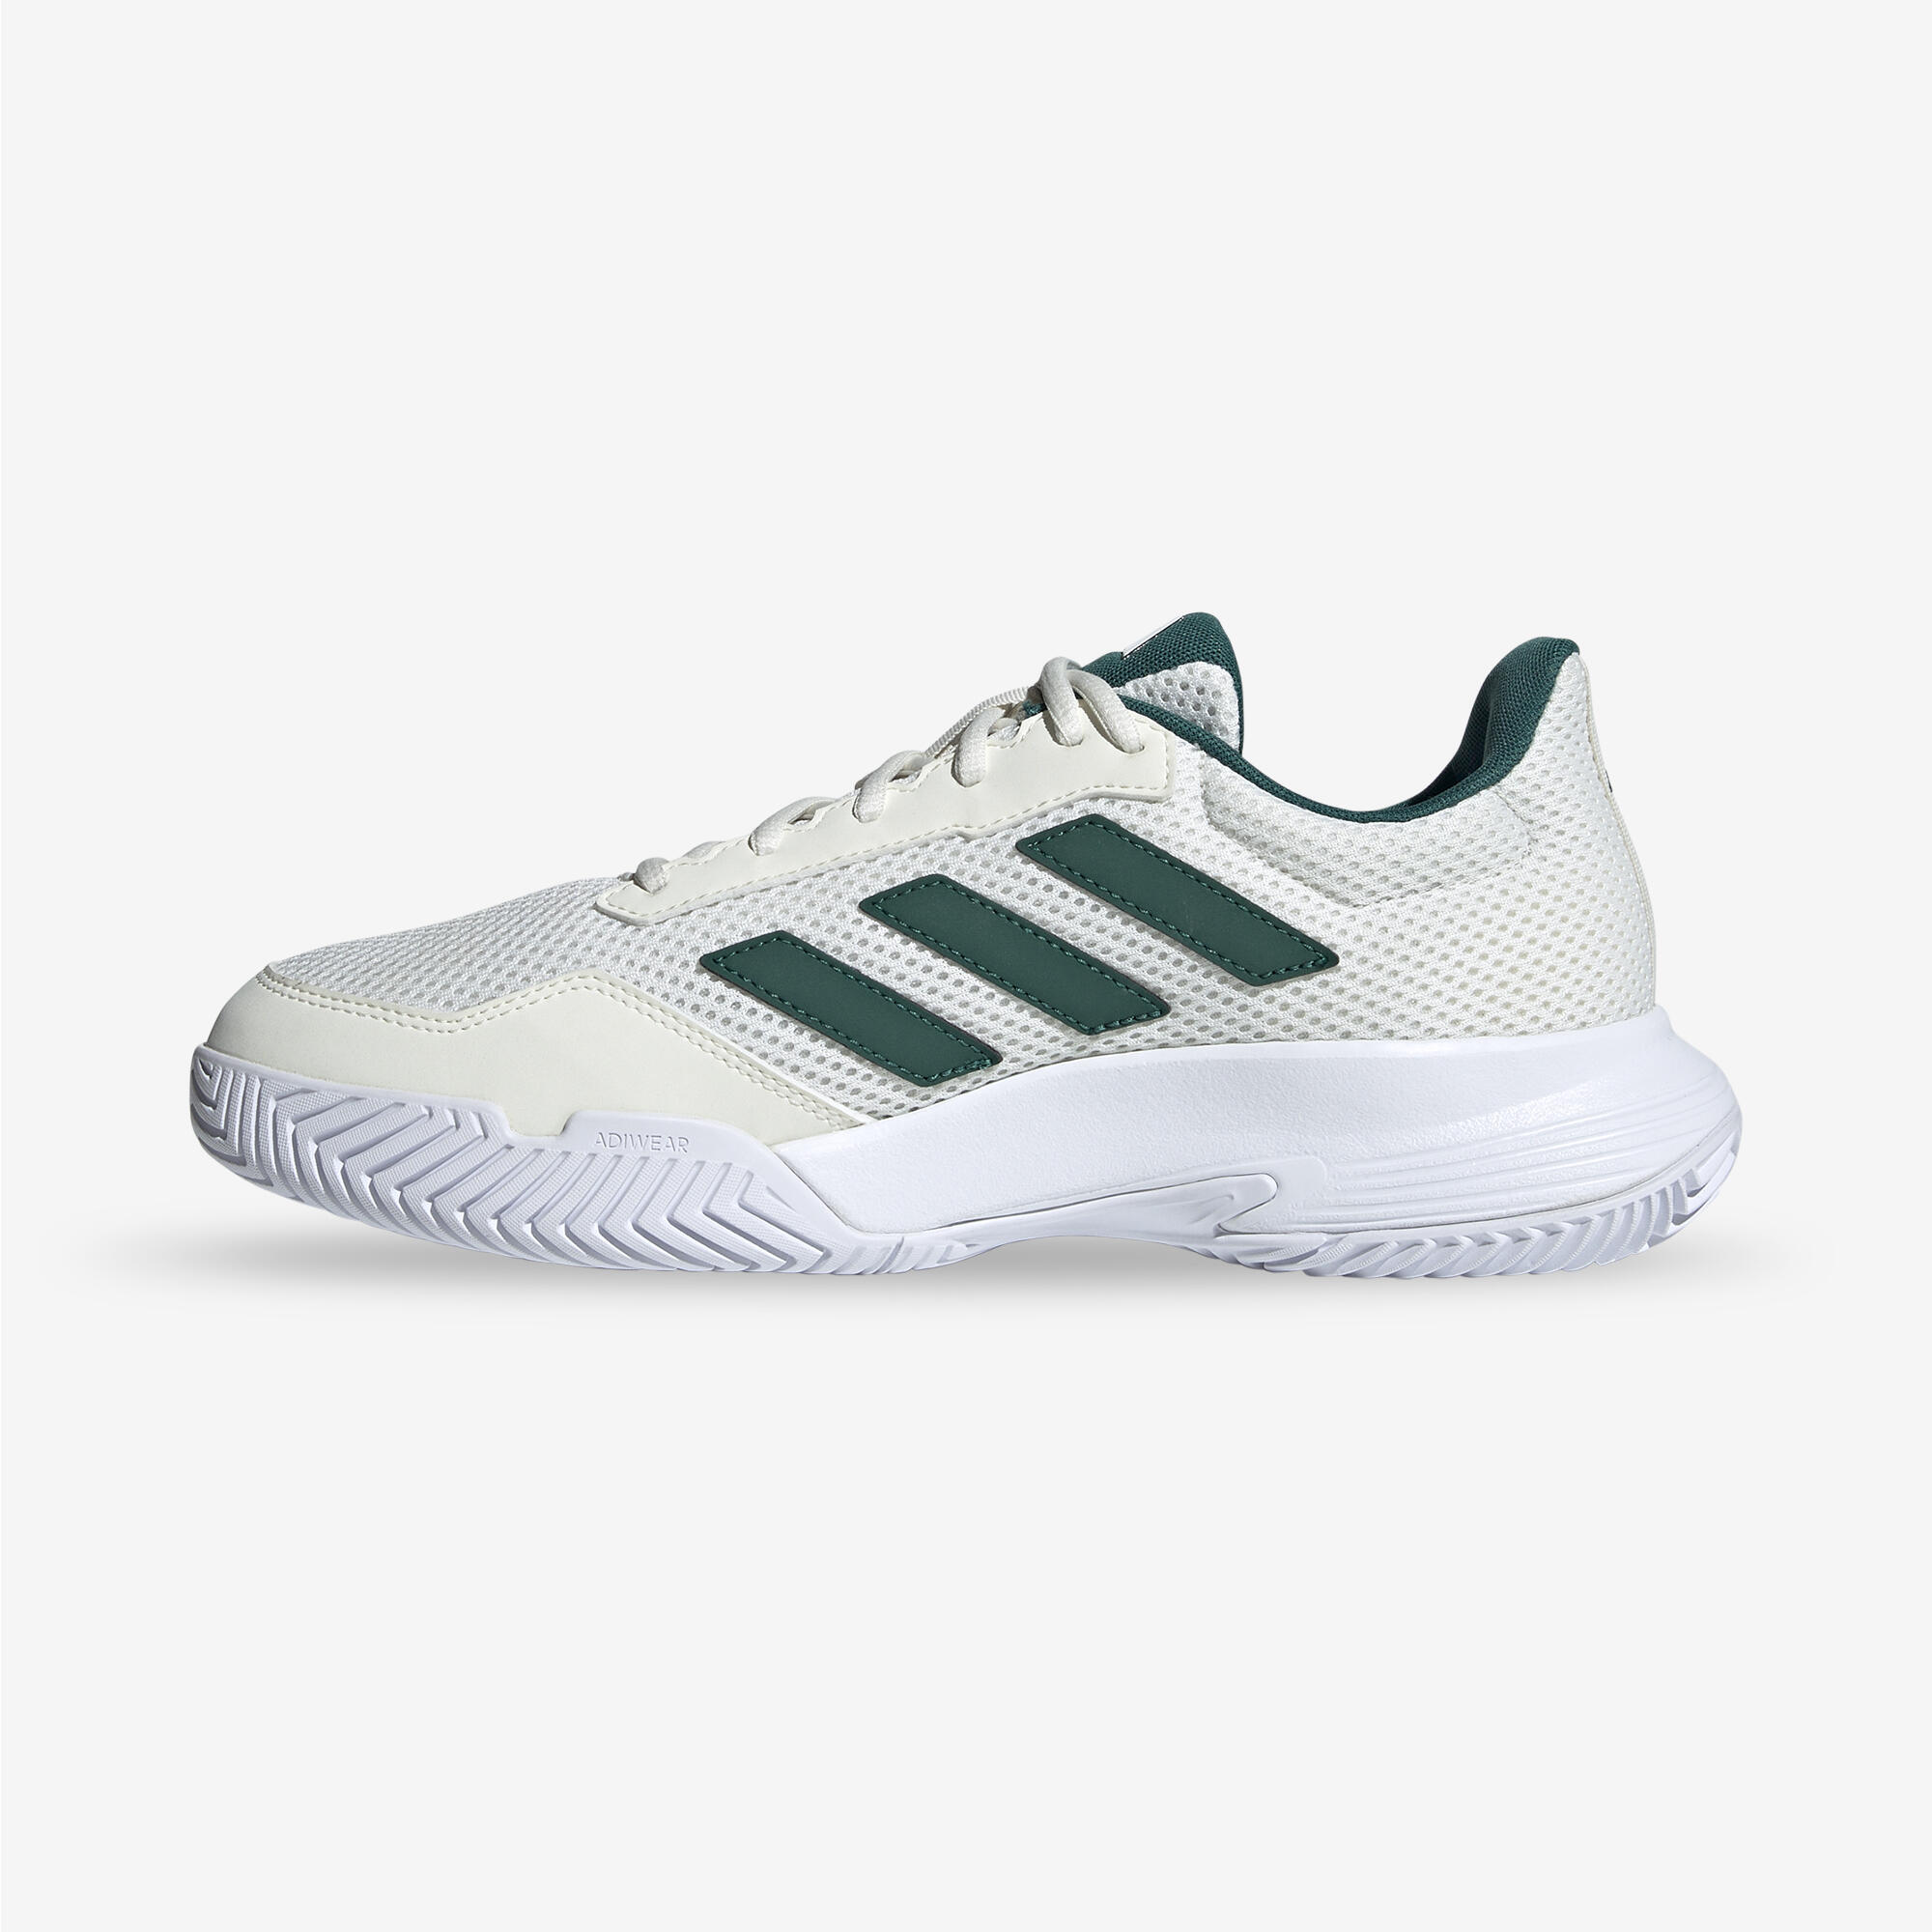 Men's Multicourt Tennis Shoes Gamespec - White/Green 2/7